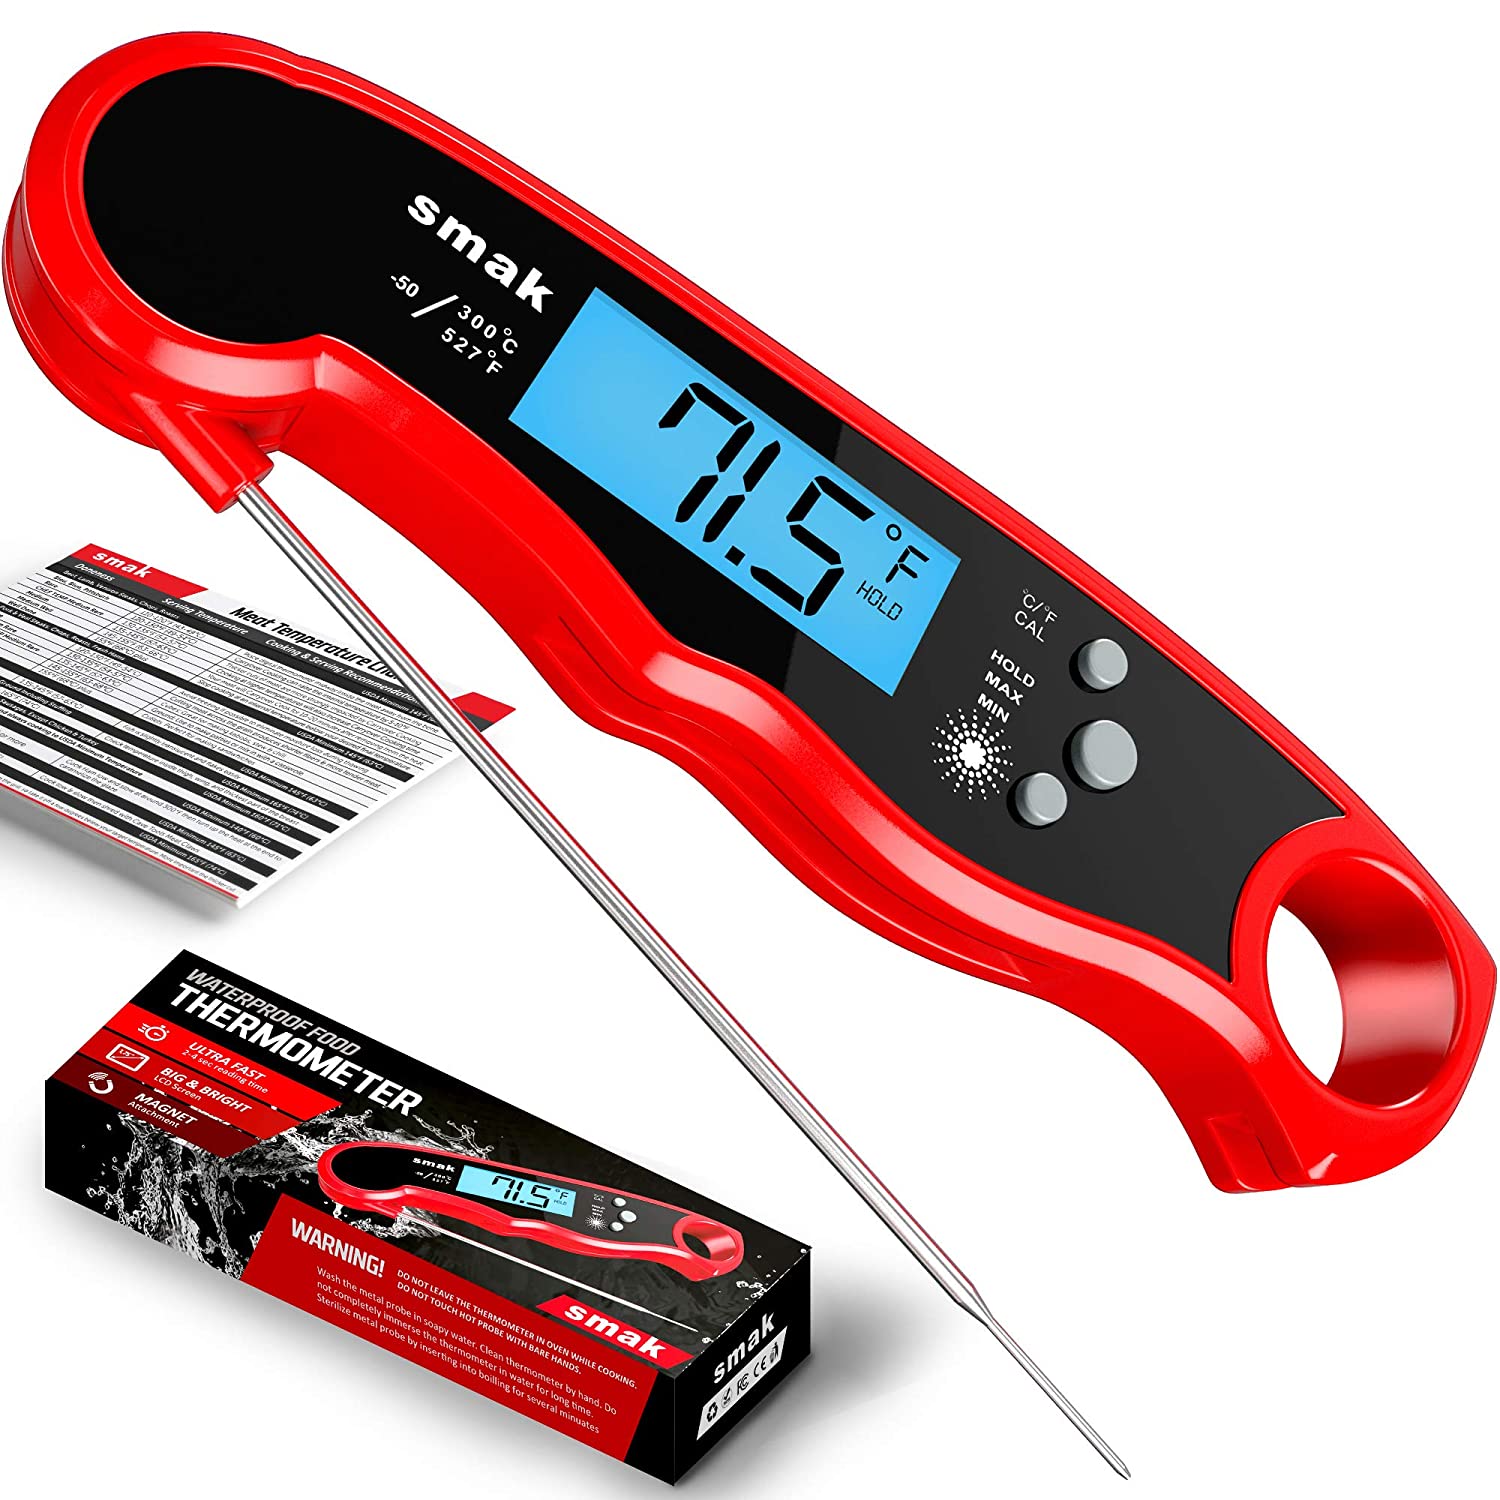 SMAK Battery Powered Waterproof Digital Meat Thermometer